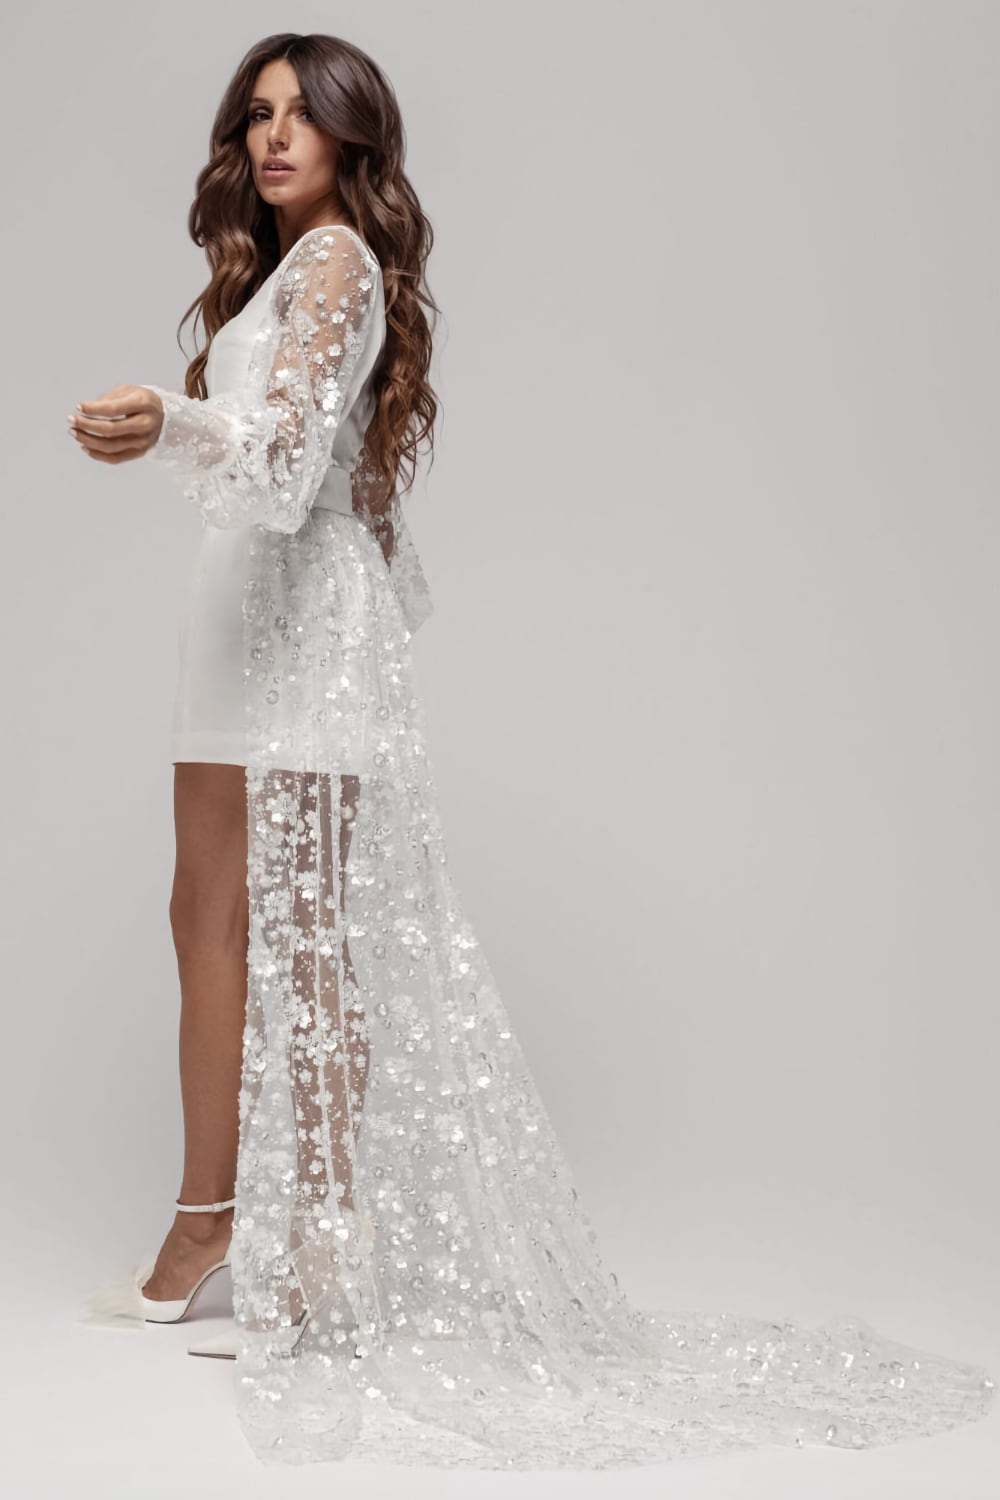 Meryl Suissa wedding dress @ Melody Nelson